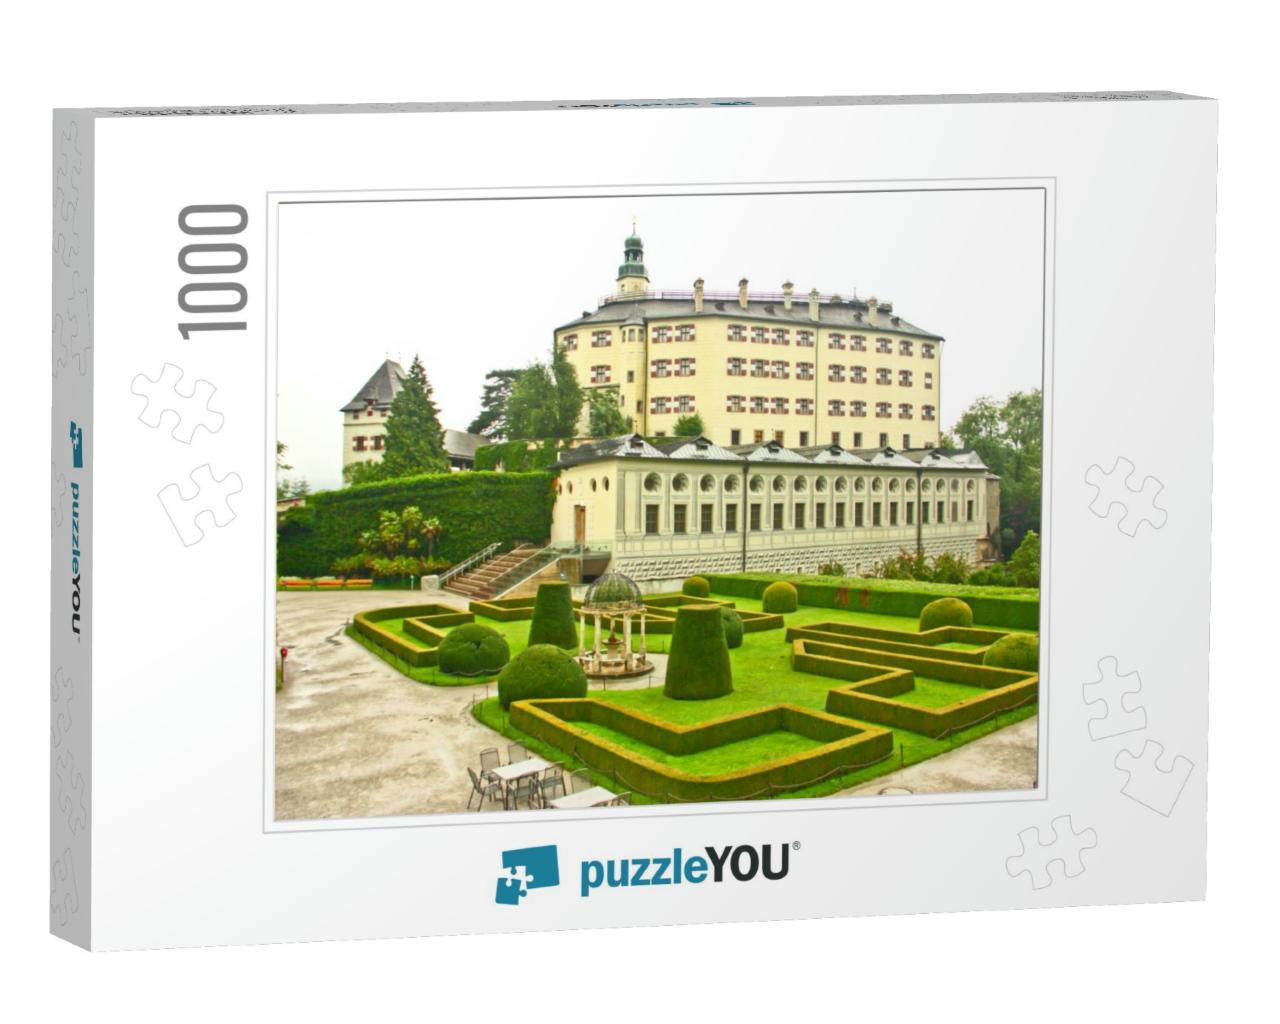 Ambras Castle & Garden, Landmark in Innsbruck, Austria... Jigsaw Puzzle with 1000 pieces